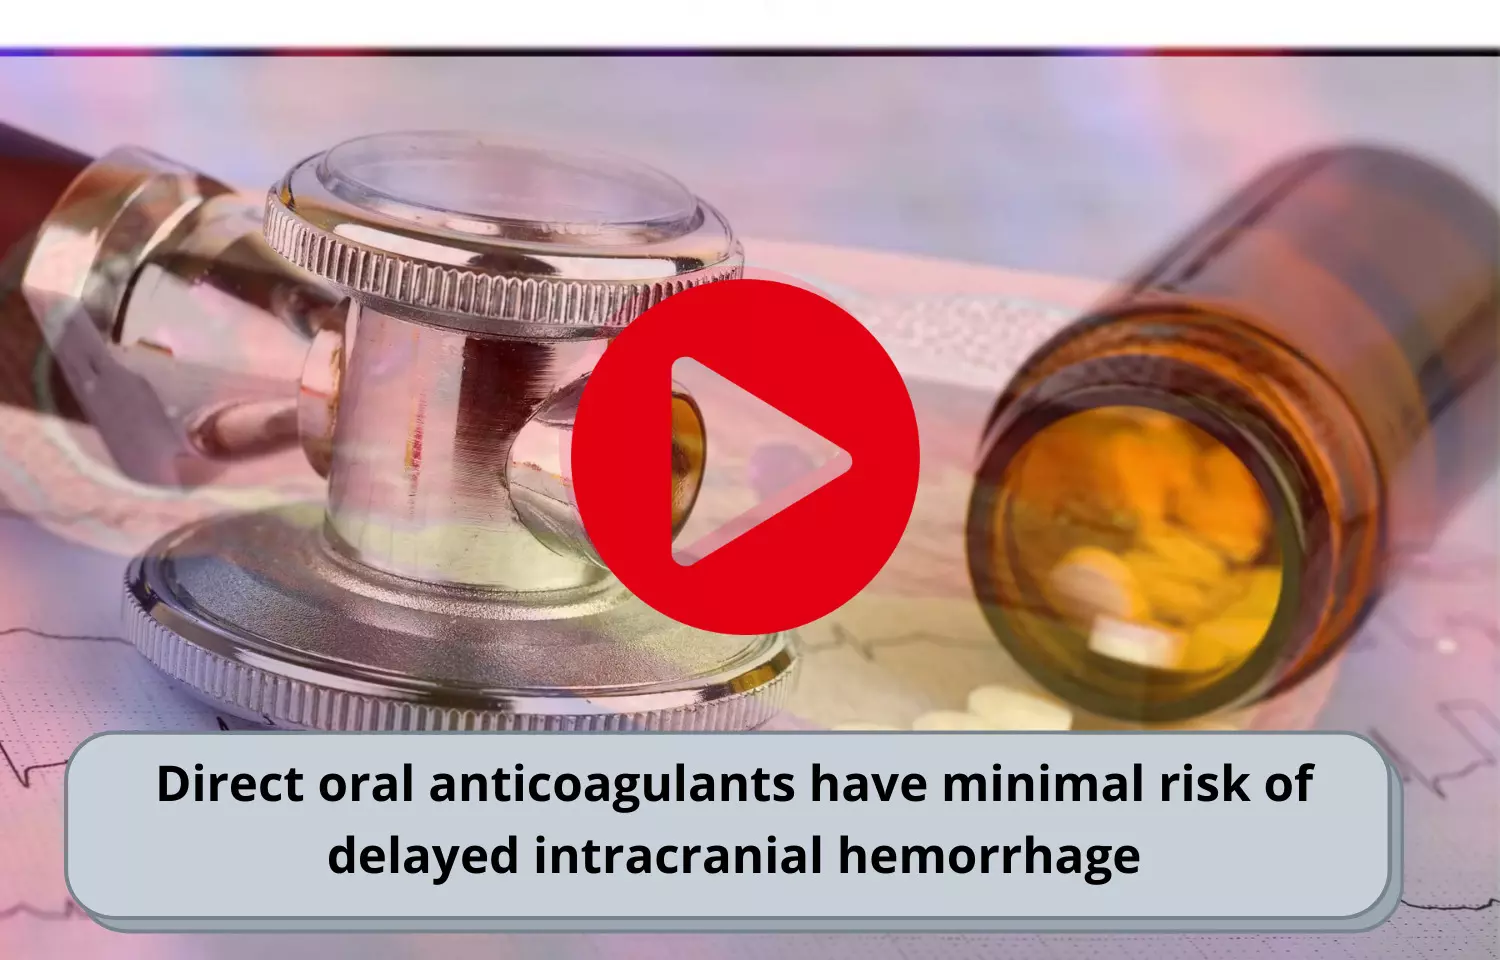 Direct oral anticoagulants have minimal risk of delayed intracranial hemorrhage